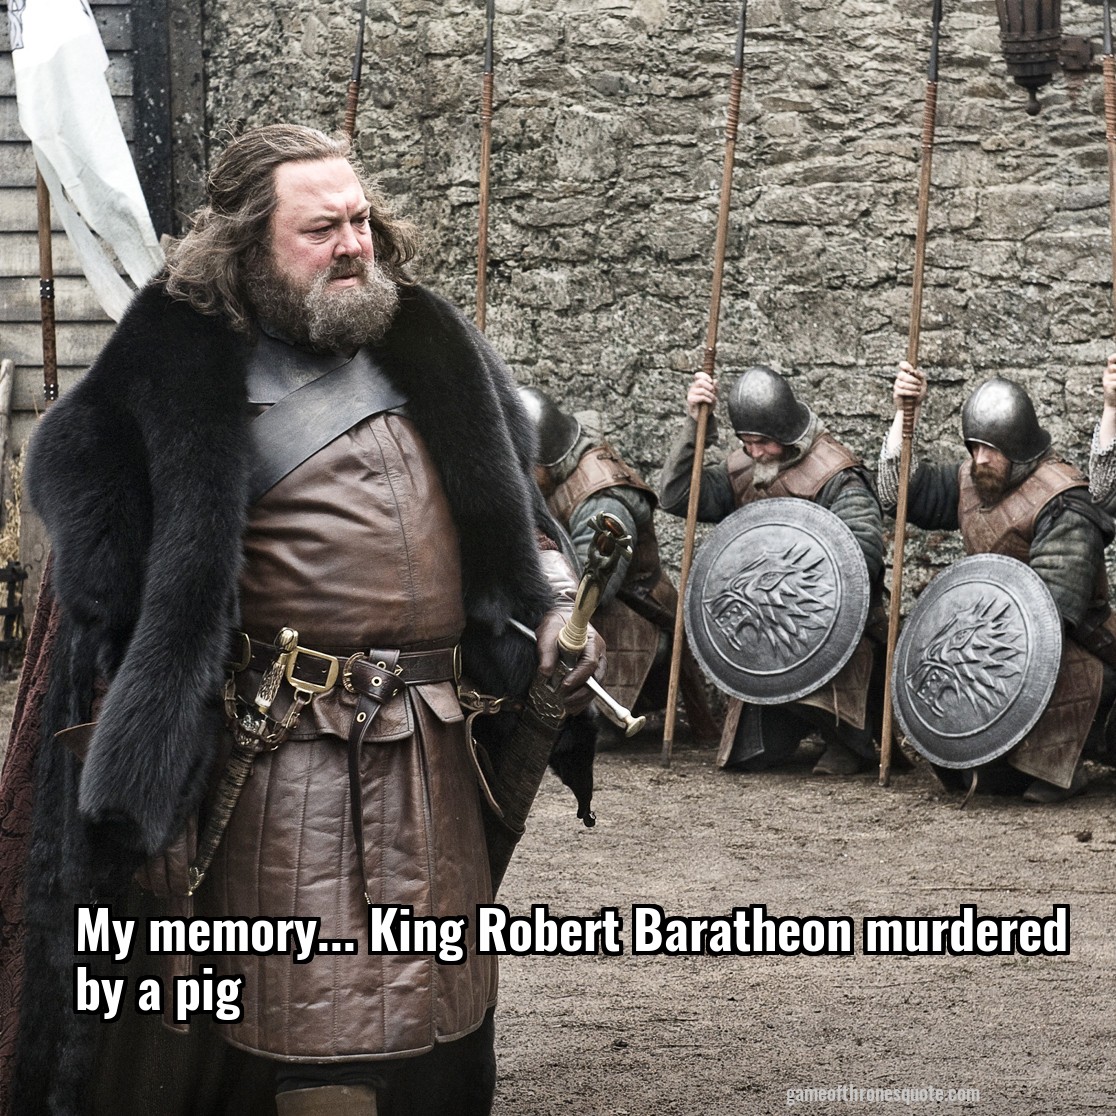 My memory... King Robert Baratheon murdered by a pig